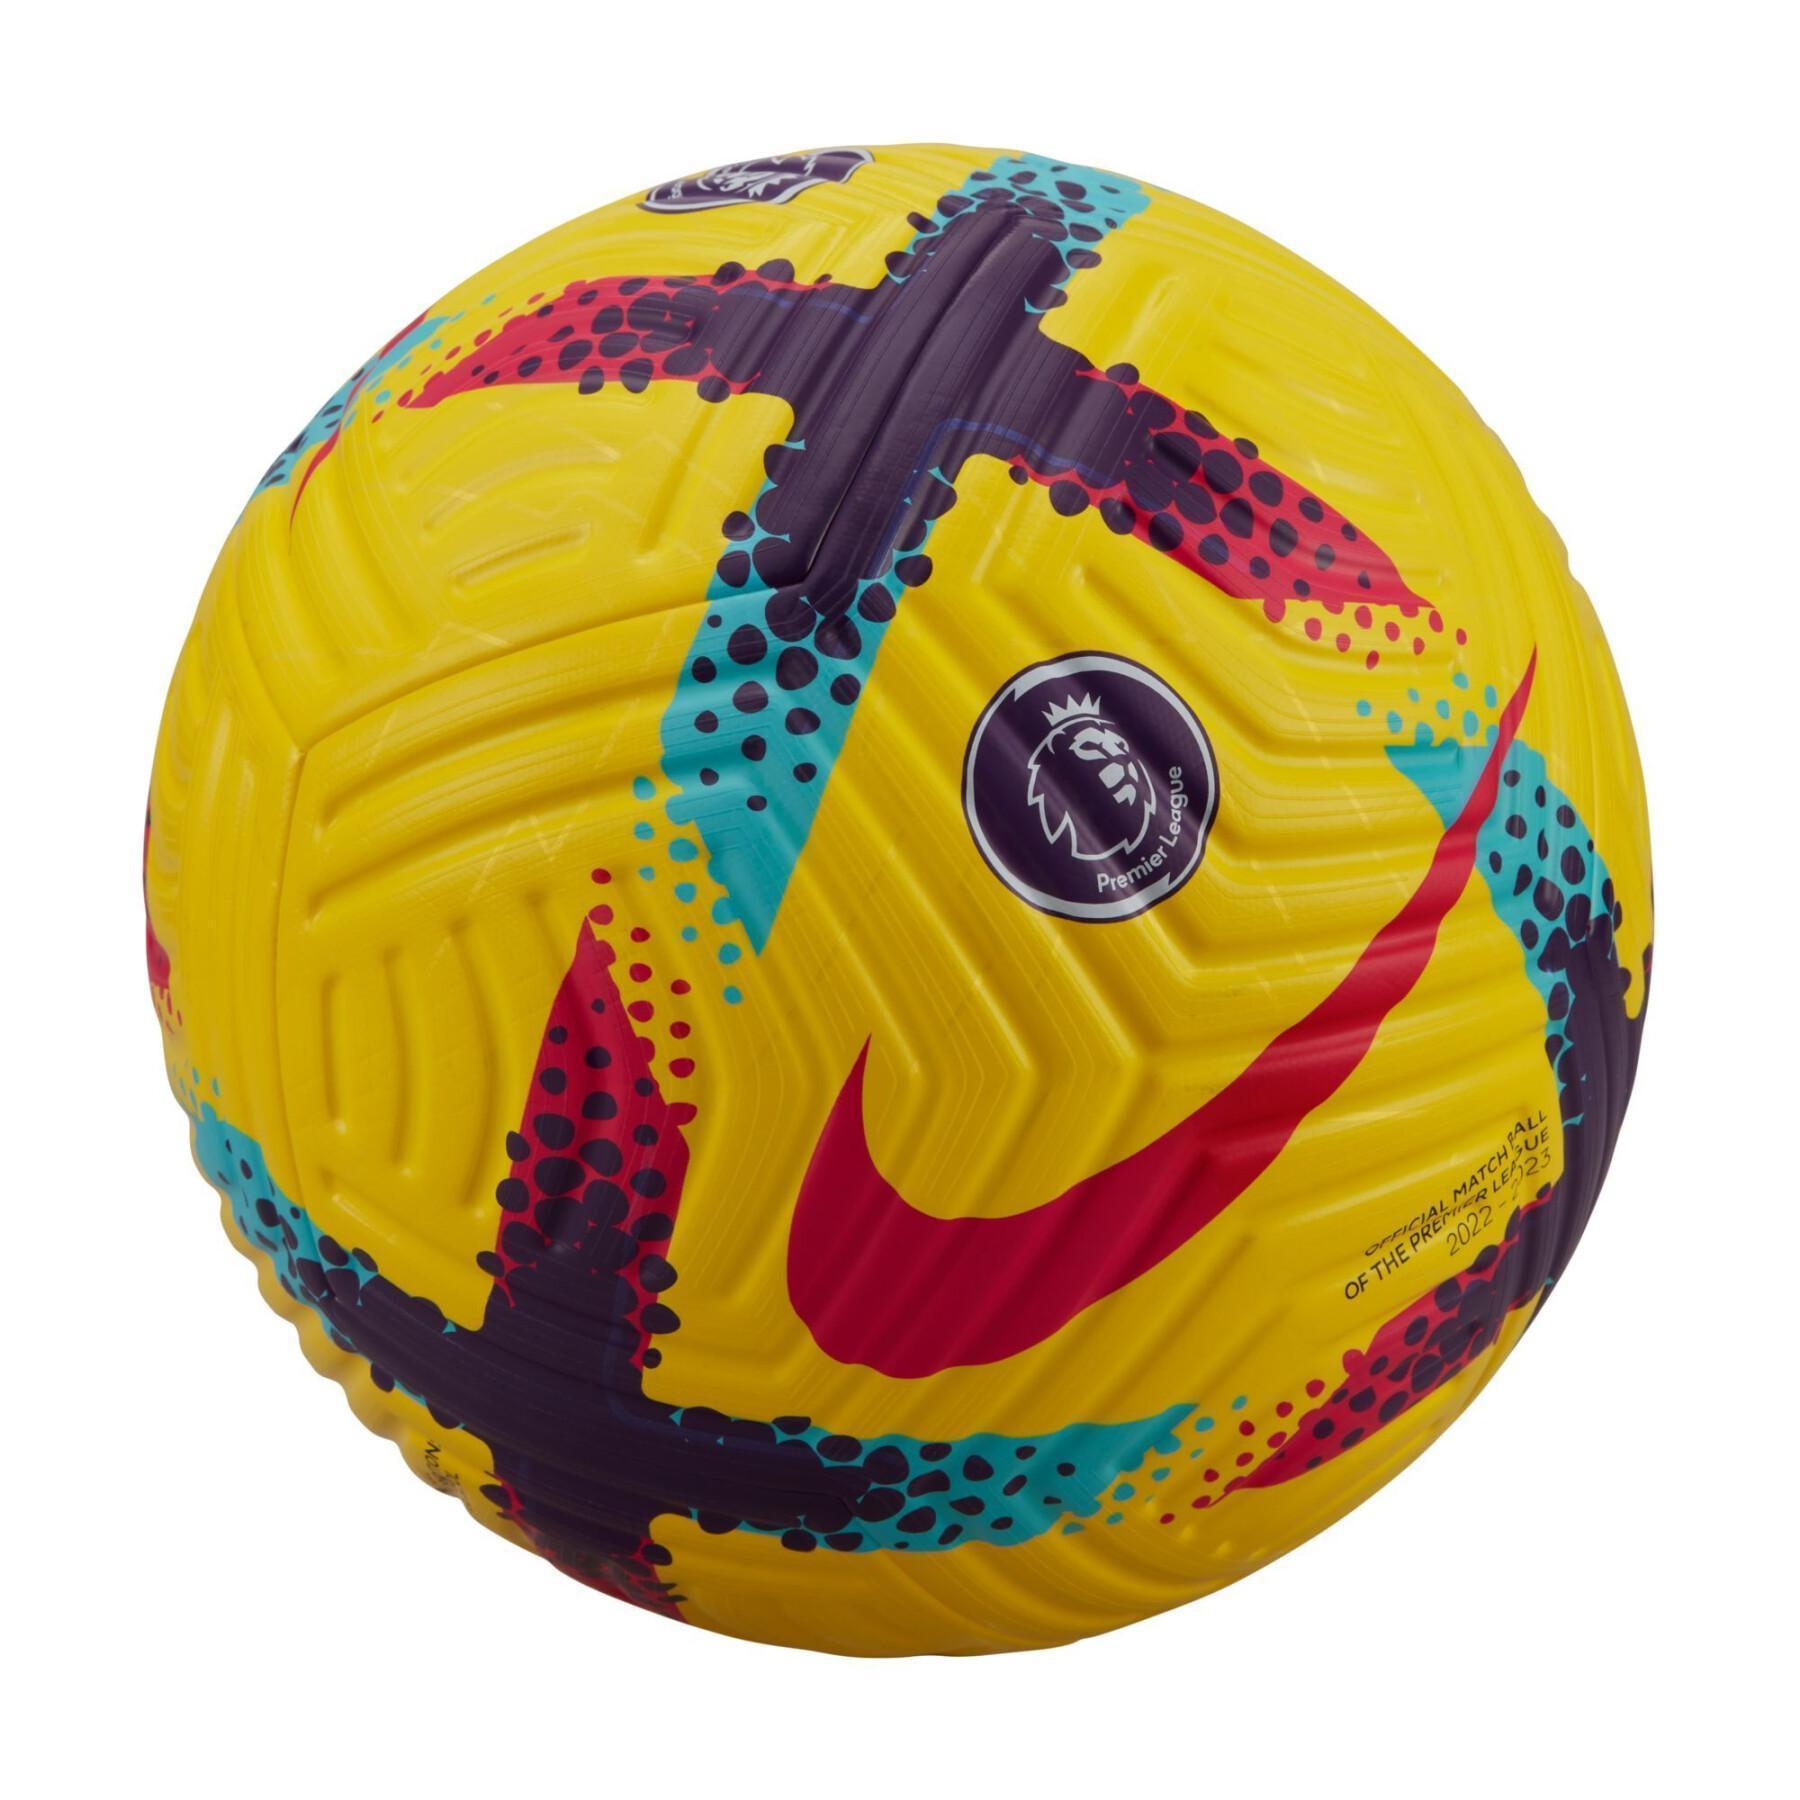 Ballon Nike Premier League Flight - Ballons - Equipements - Football